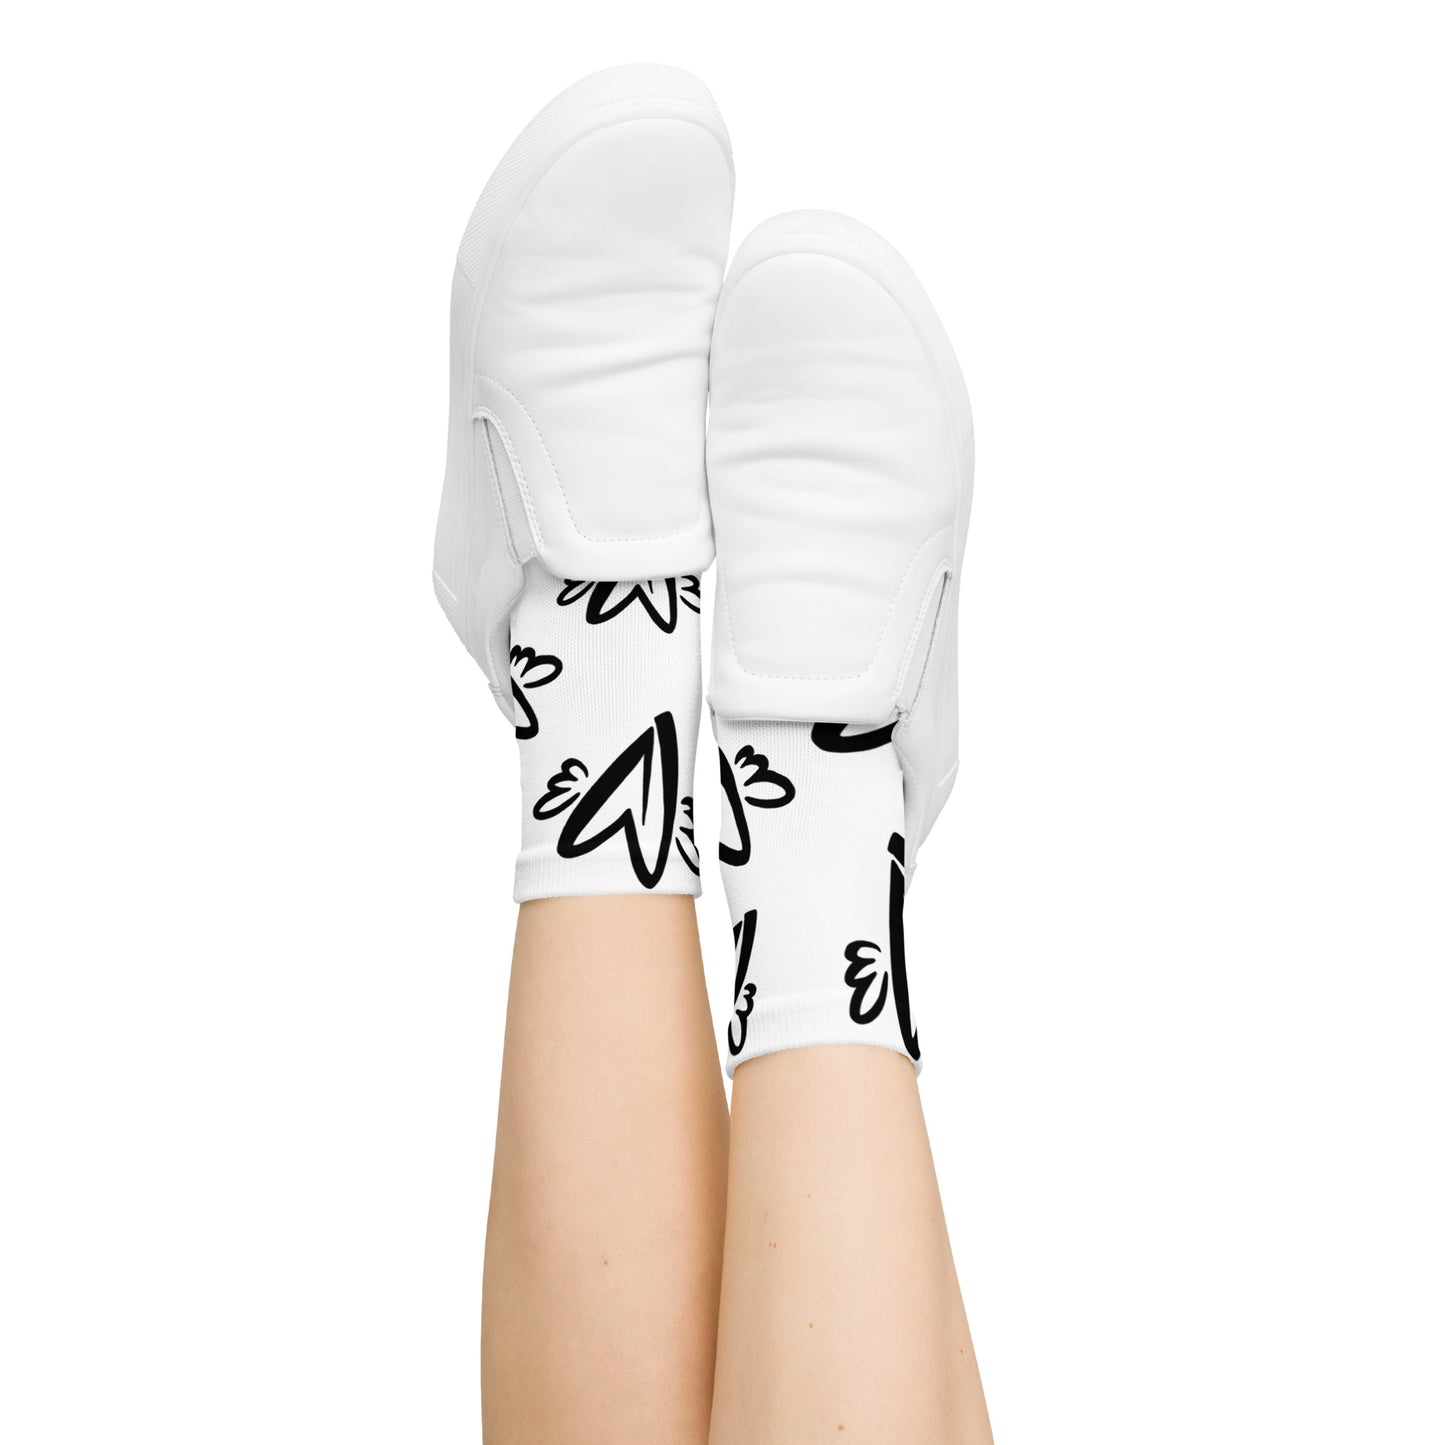 MetaVixens Ankle Socks